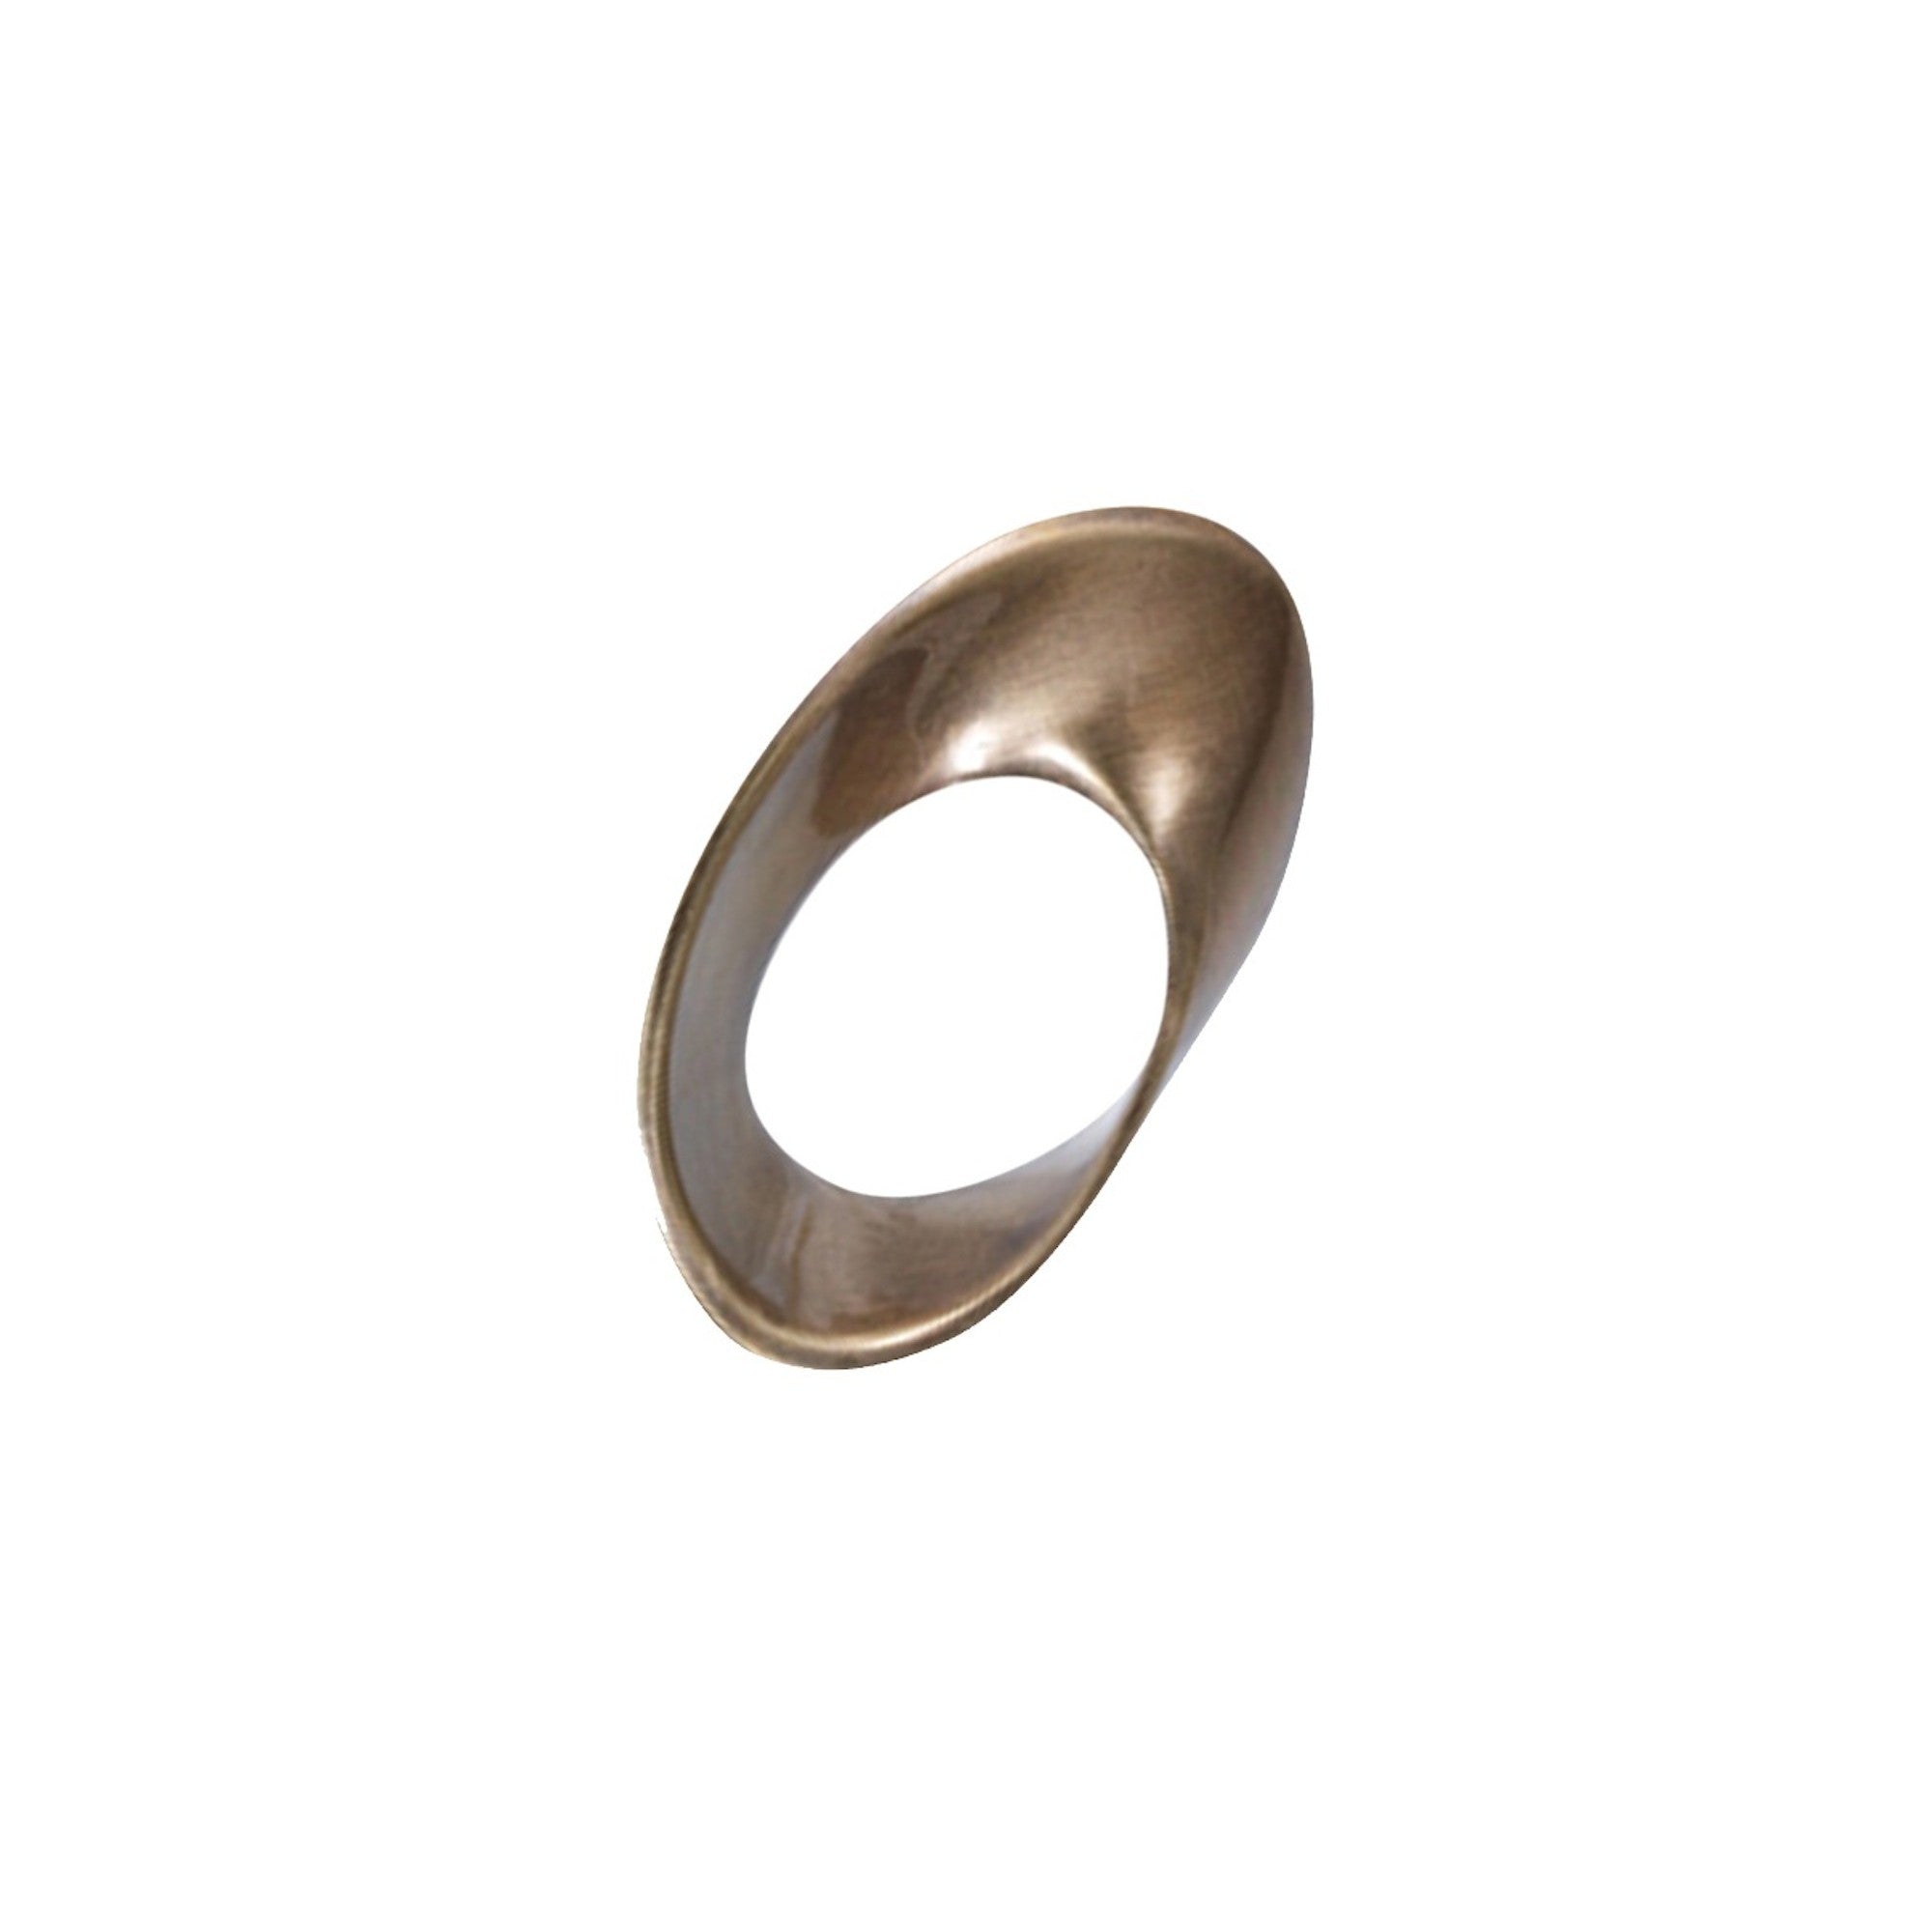 Morgan Bronze Napkin Ring